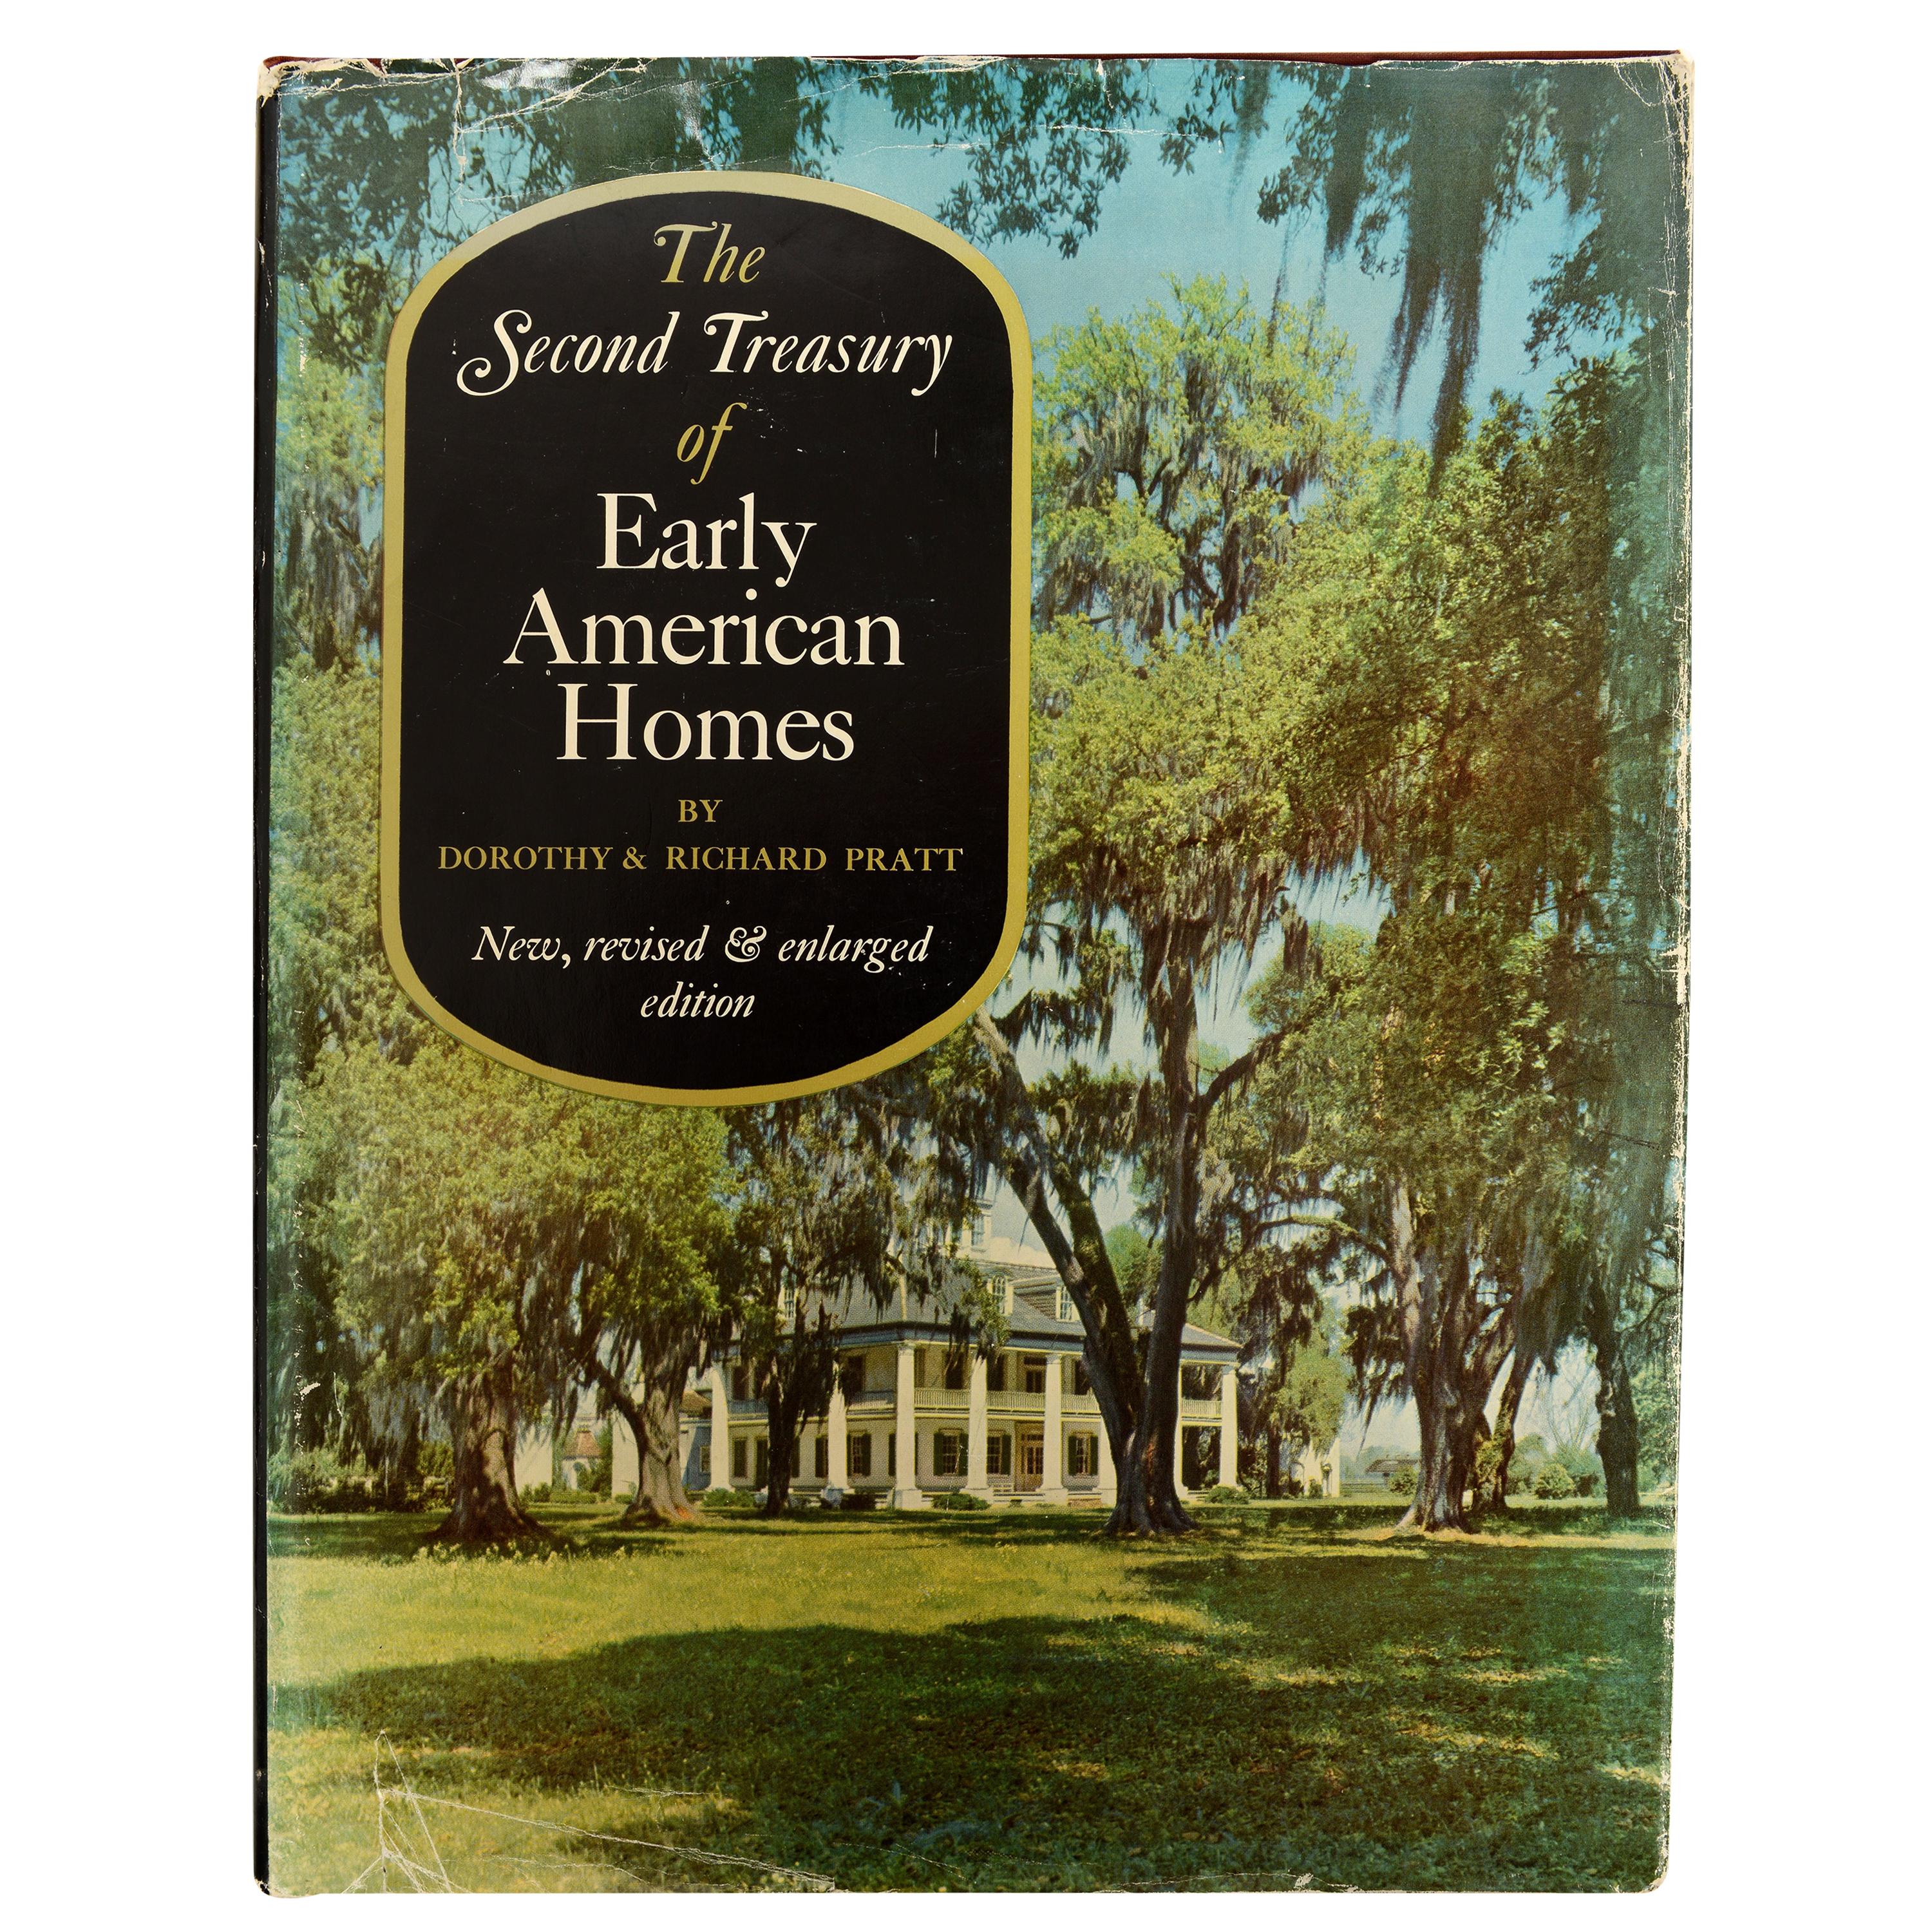 The Second Treasury of Early American Homes by Richard Pratt & Dorothy Pratt